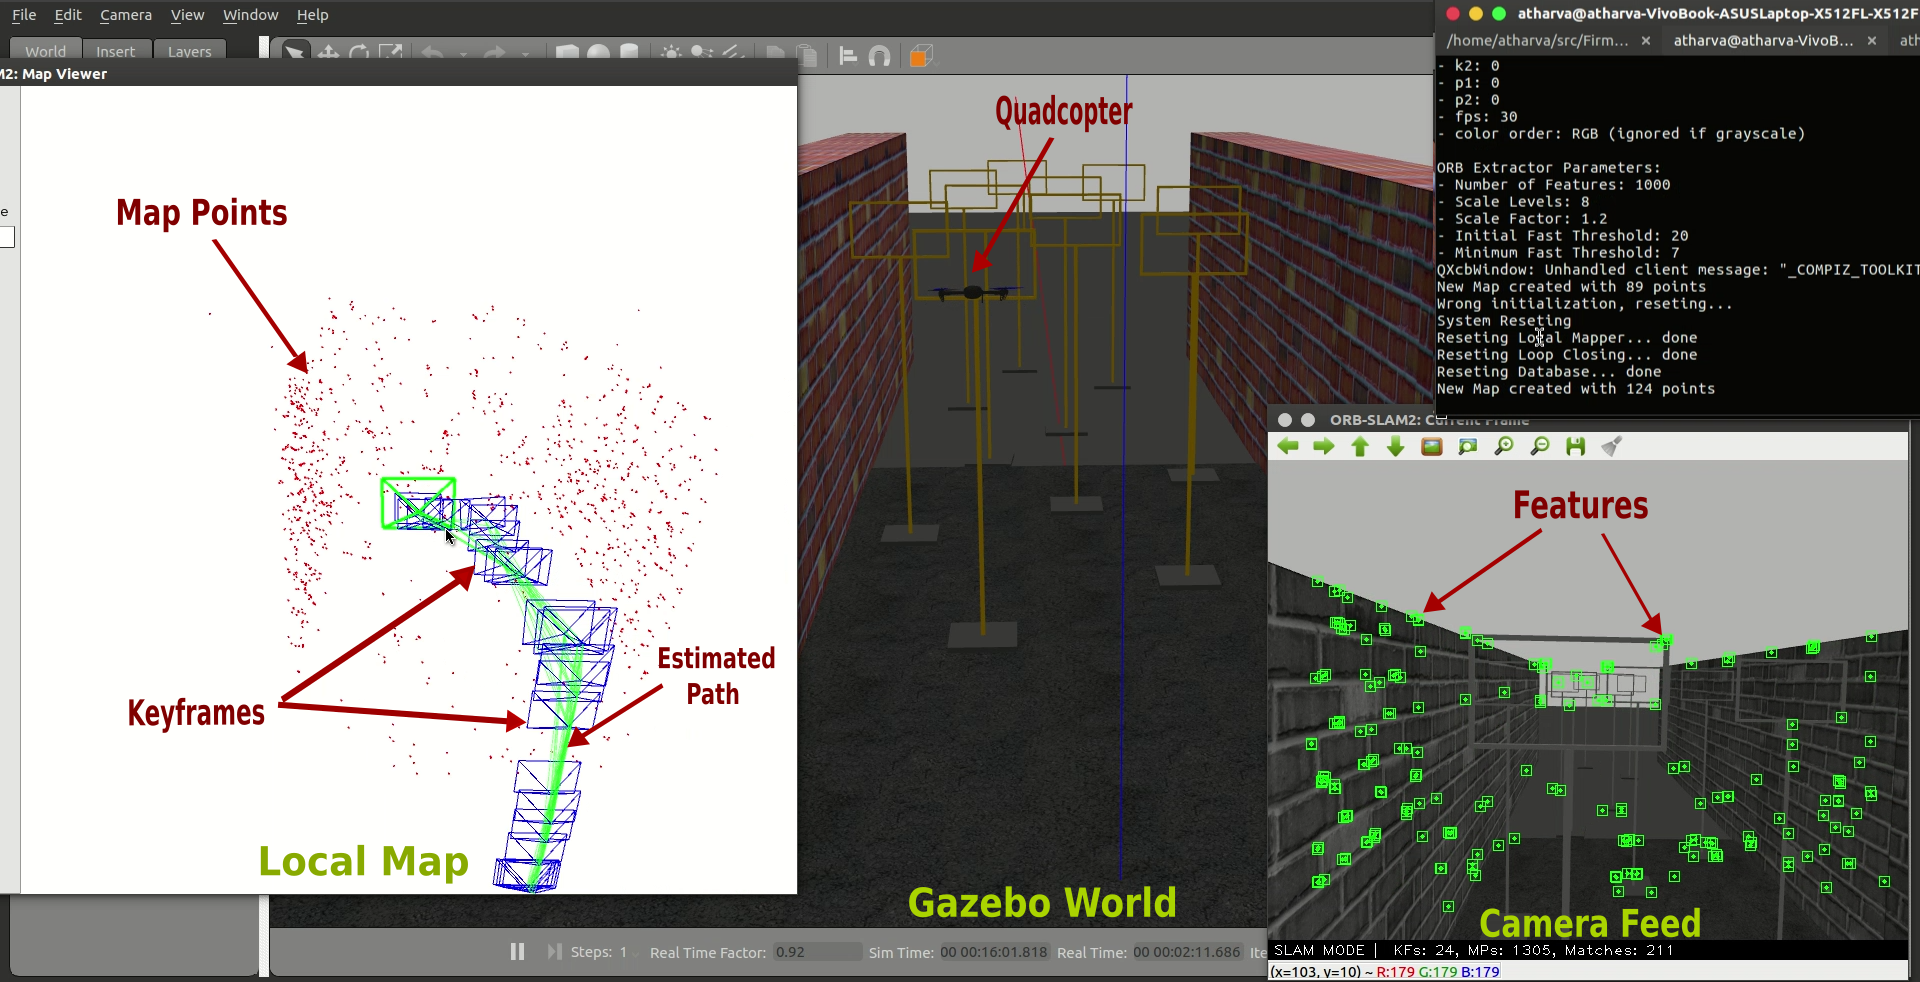 Sucessfully simulating the problem statement of Flipkart Grid 2.0 autonomous indoor challenge on Gazebo Simulator using PX4 - SITL.